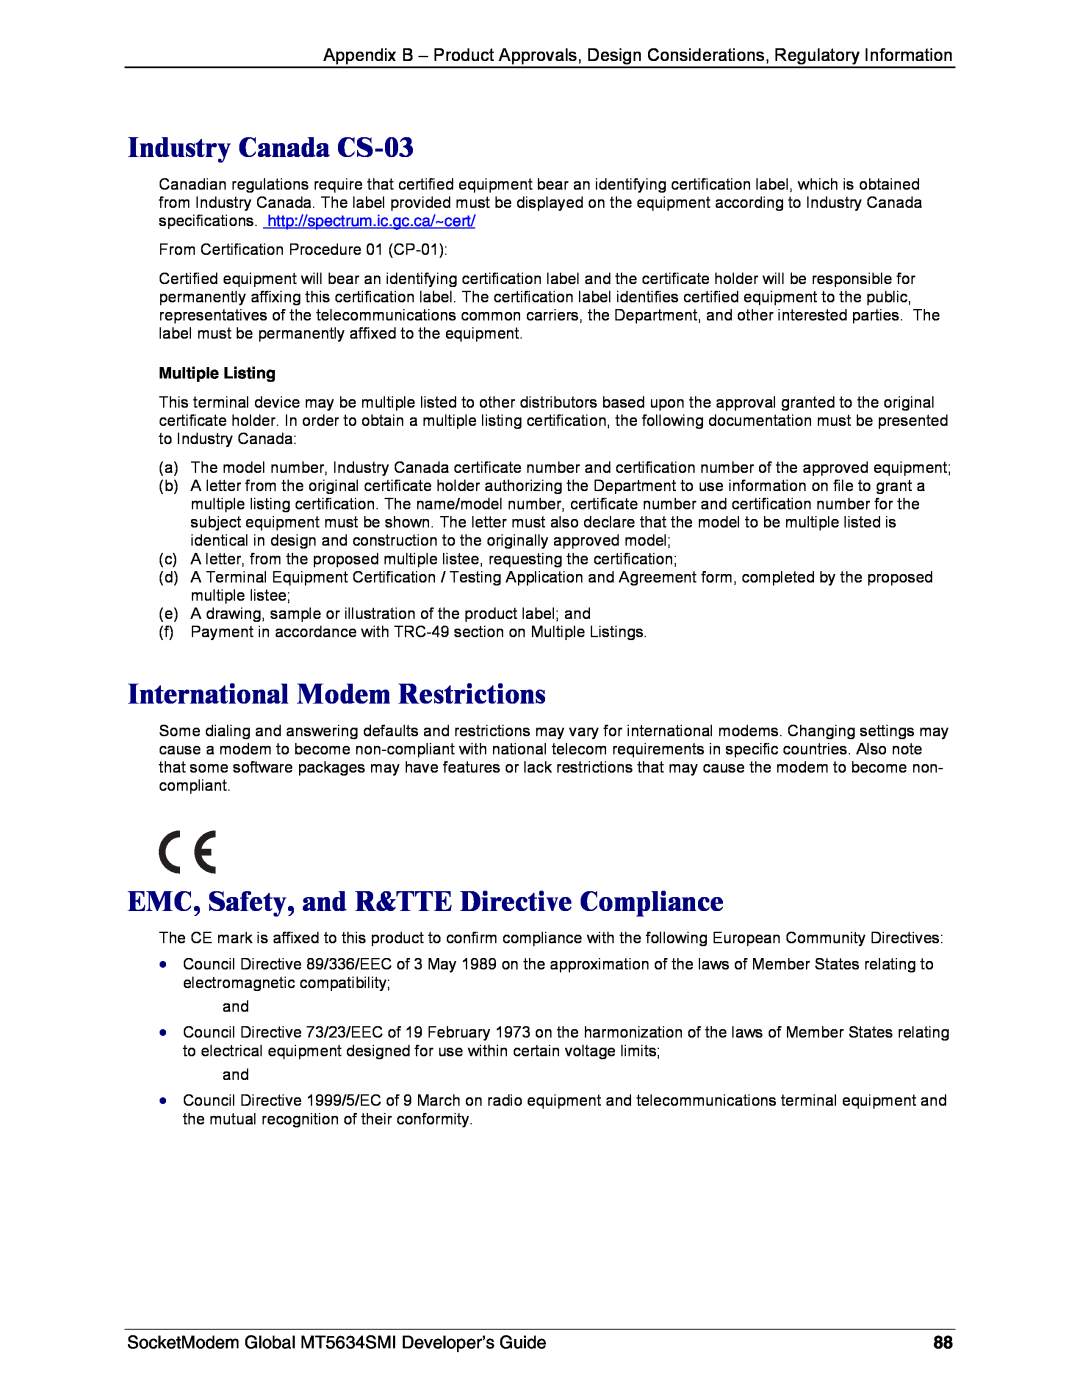 Technics MT5634SMI-92 Industry Canada CS-03, International Modem Restrictions, EMC, Safety, and R&TTE Directive Compliance 